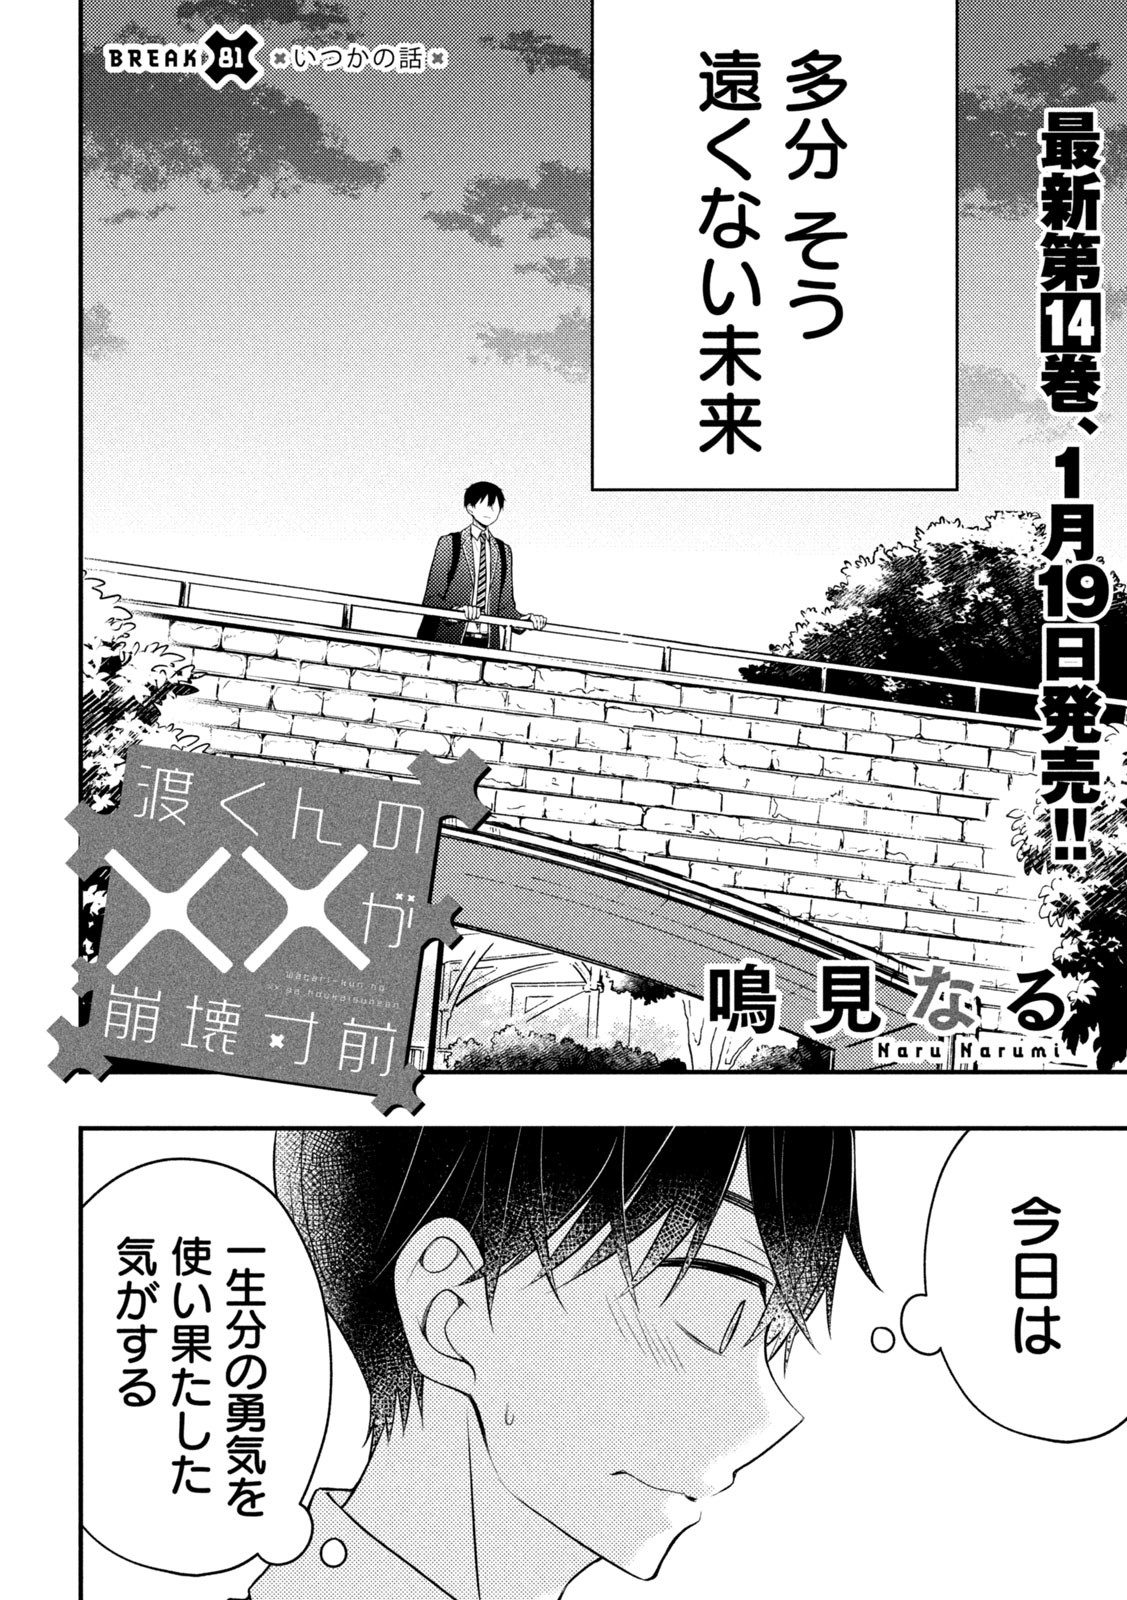 Watari-kun no xx ga Houkai Sunzen - Chapter 81 - Page 2